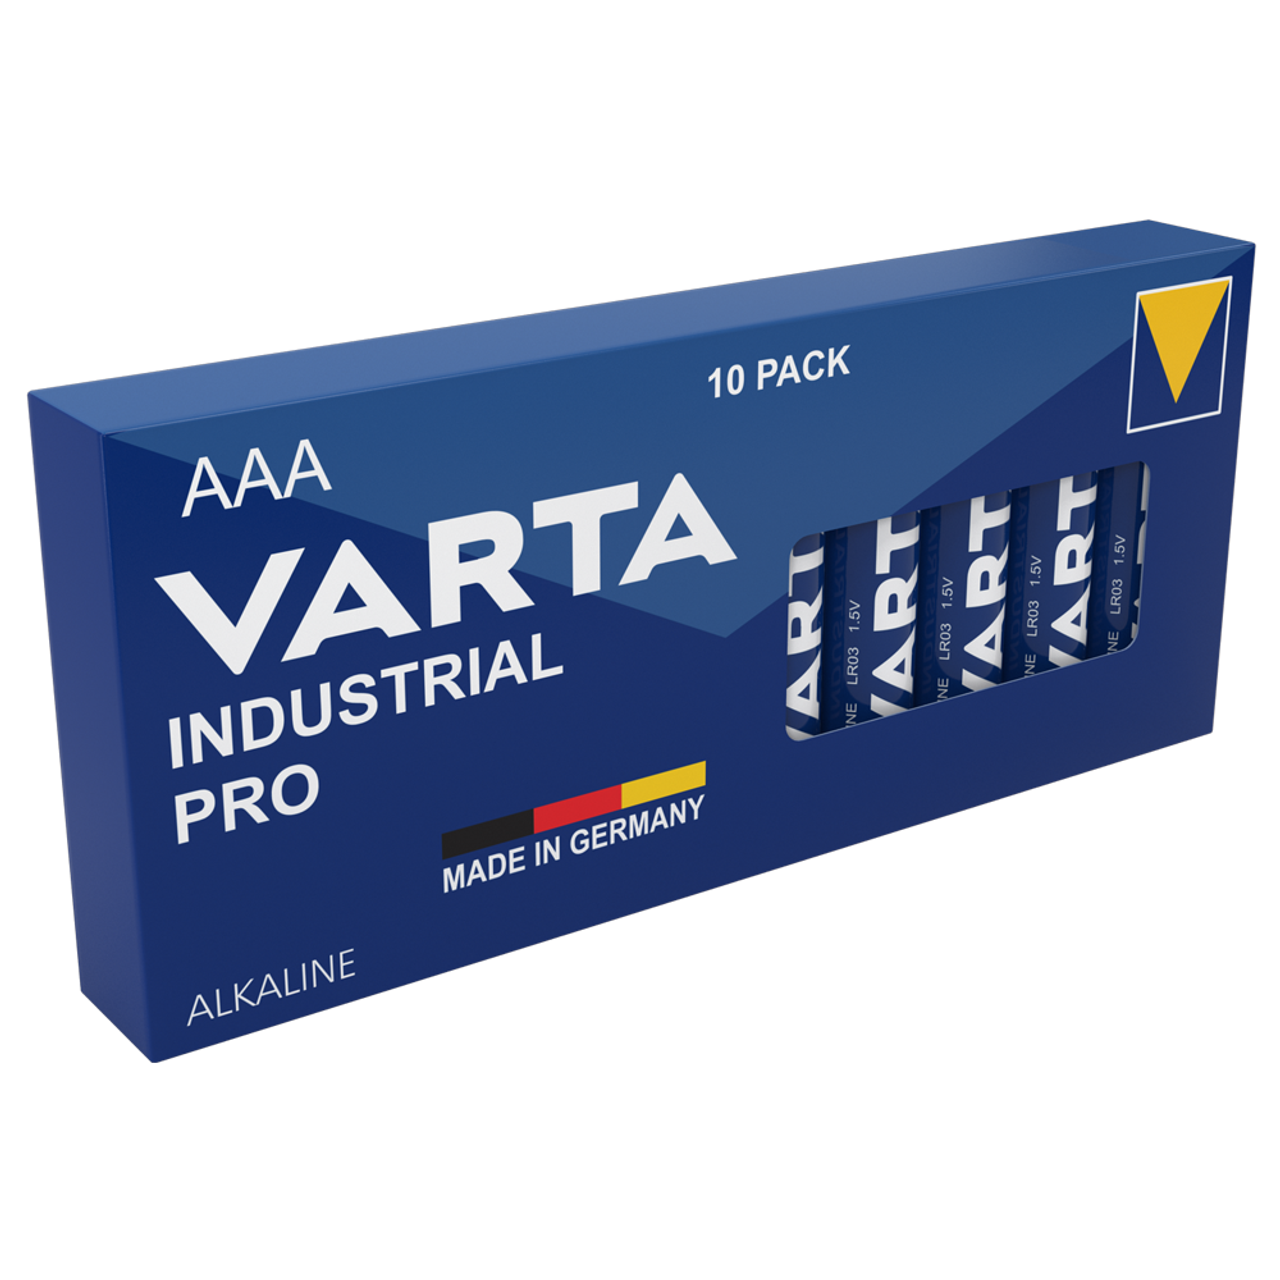 Baltrade.eu - B2B shop - 6 x Varta Longlife LR03/AAA 4103 (Blister)